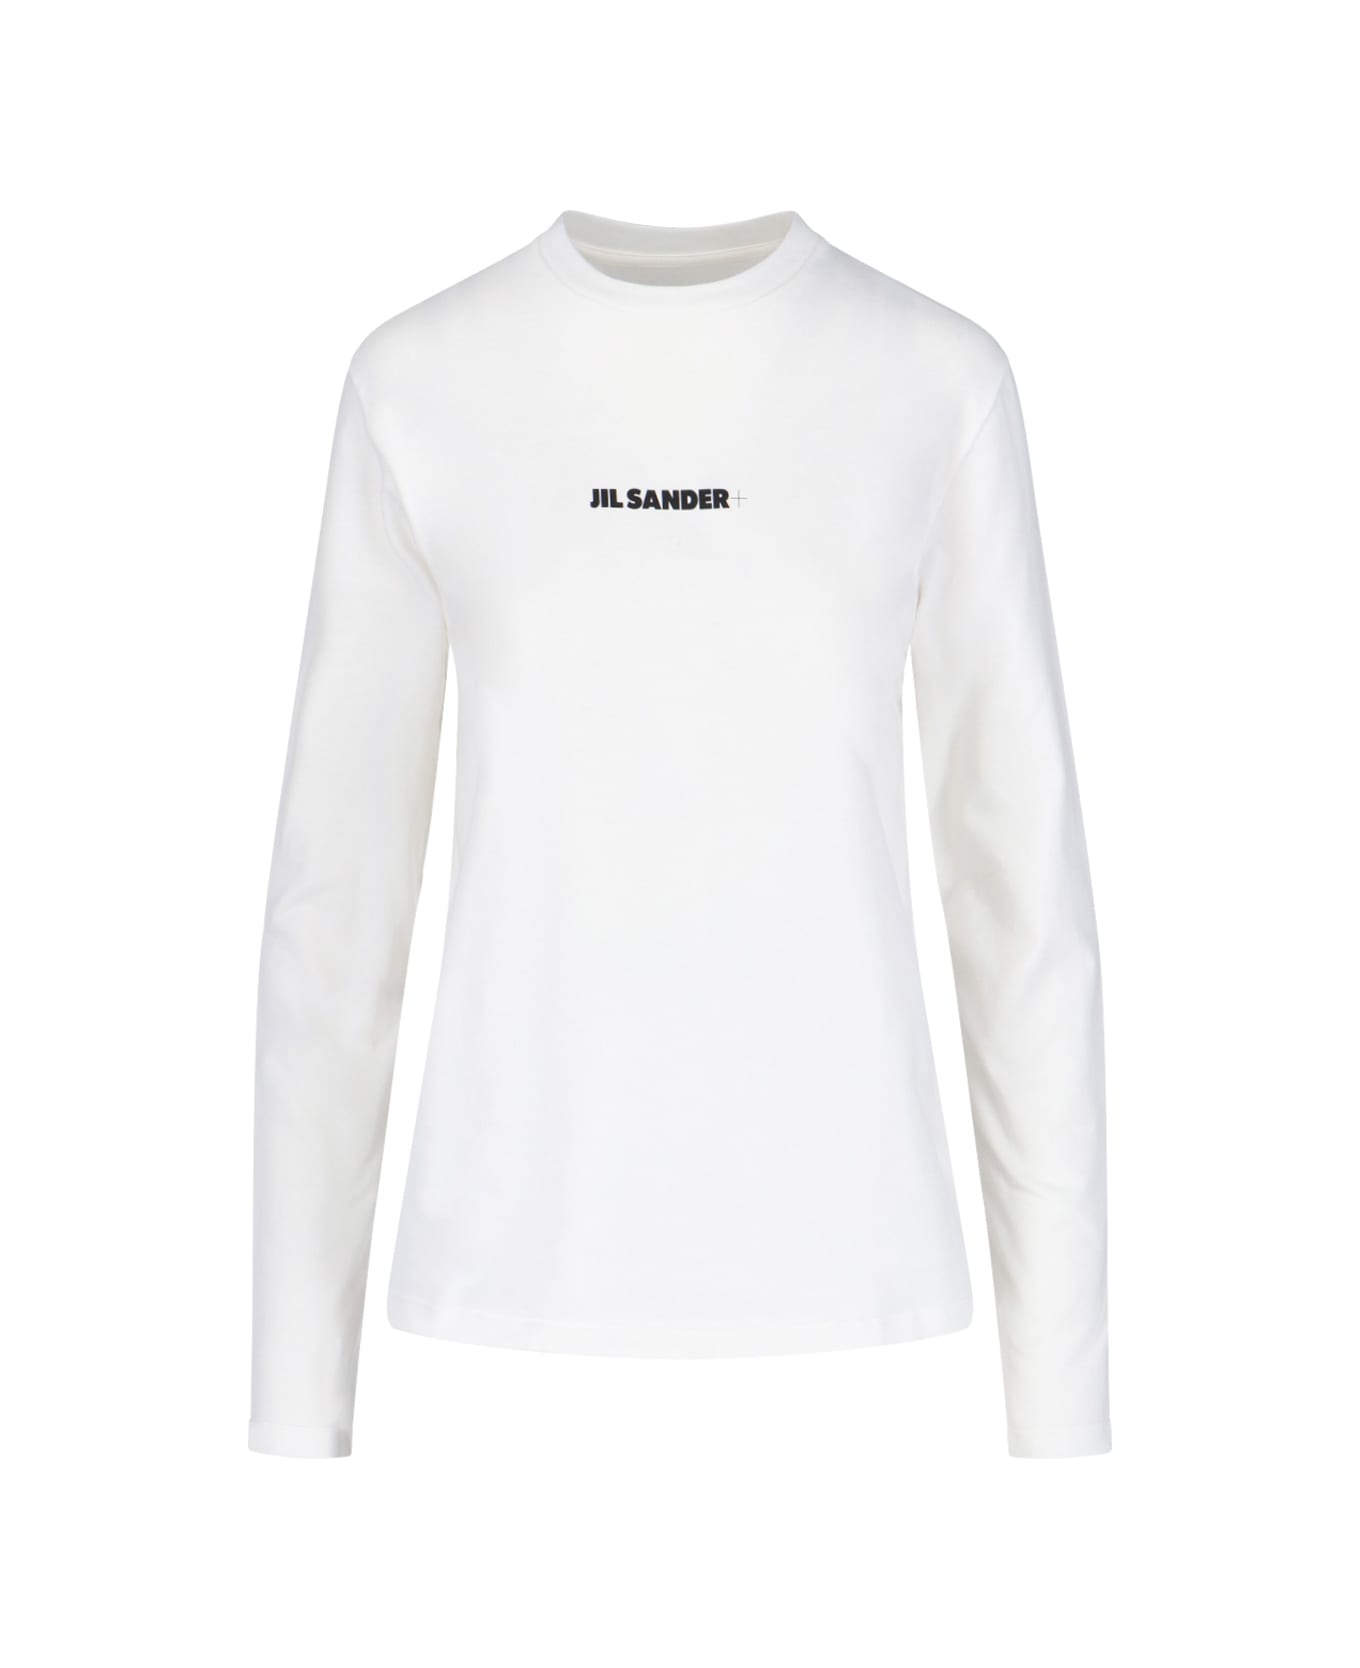 Jil Sander Logo Sweater - White Tシャツ